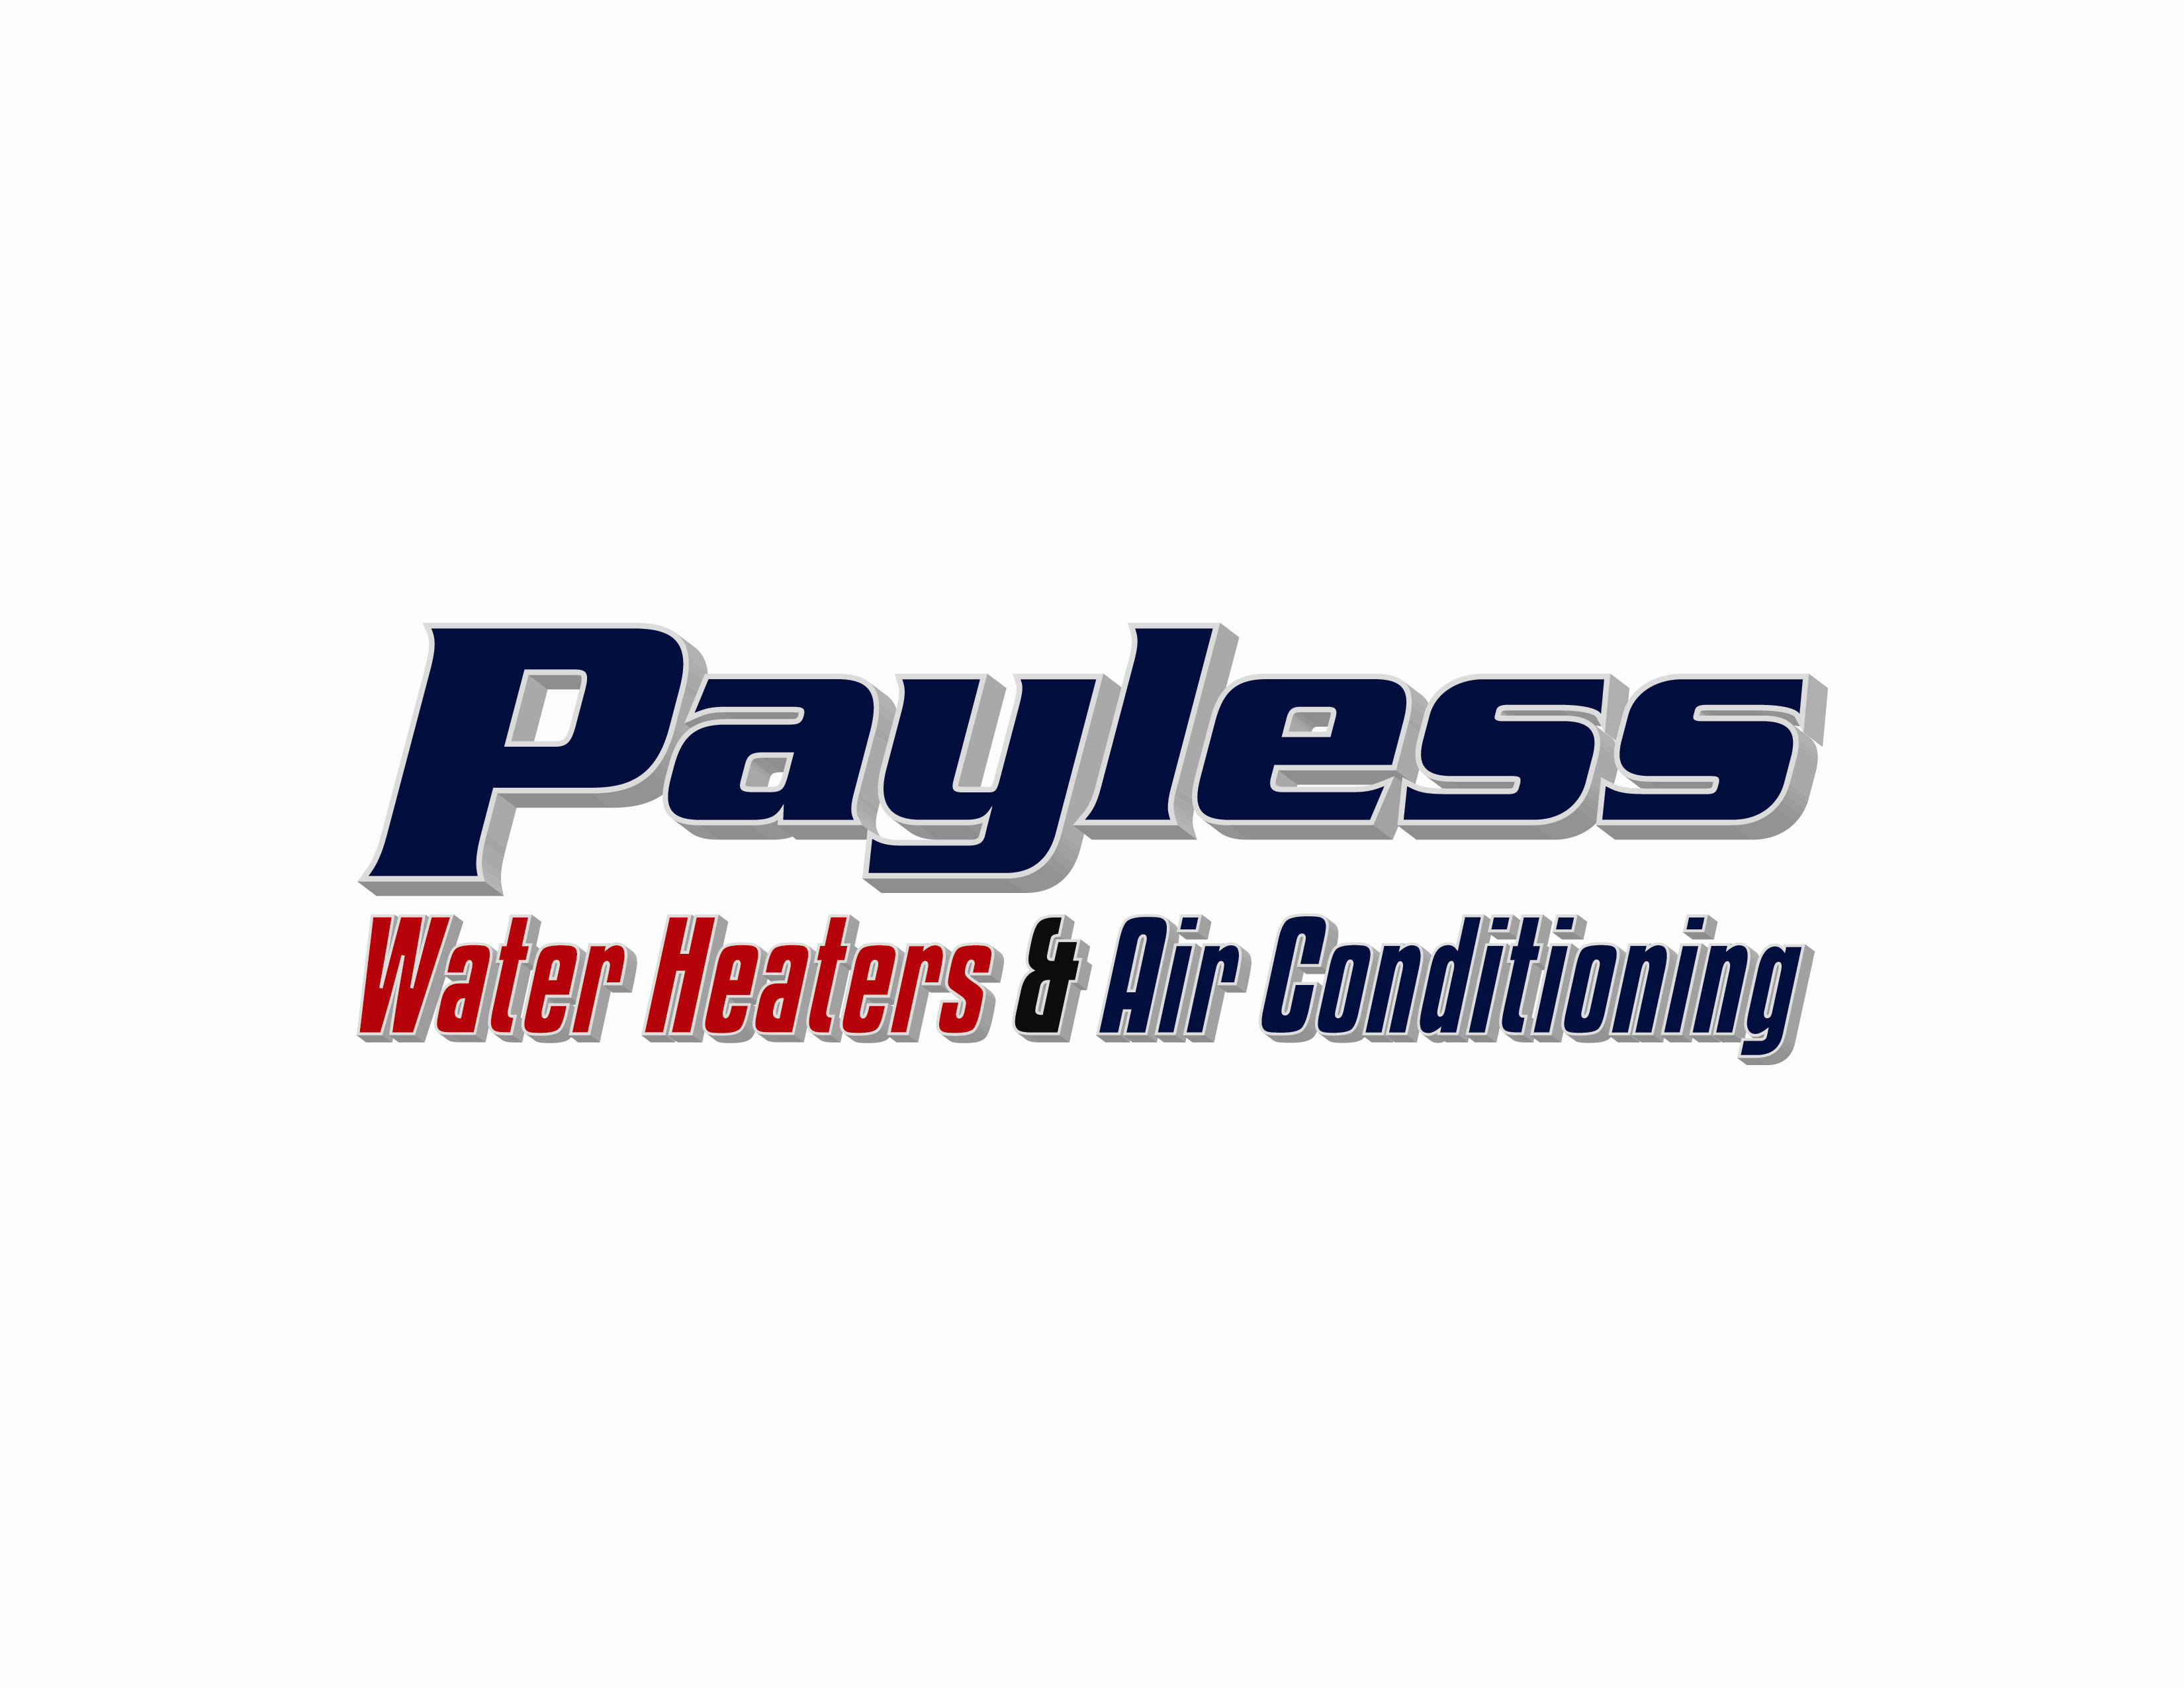 Payless Water Heaters & Plumbing, Inc. Logo